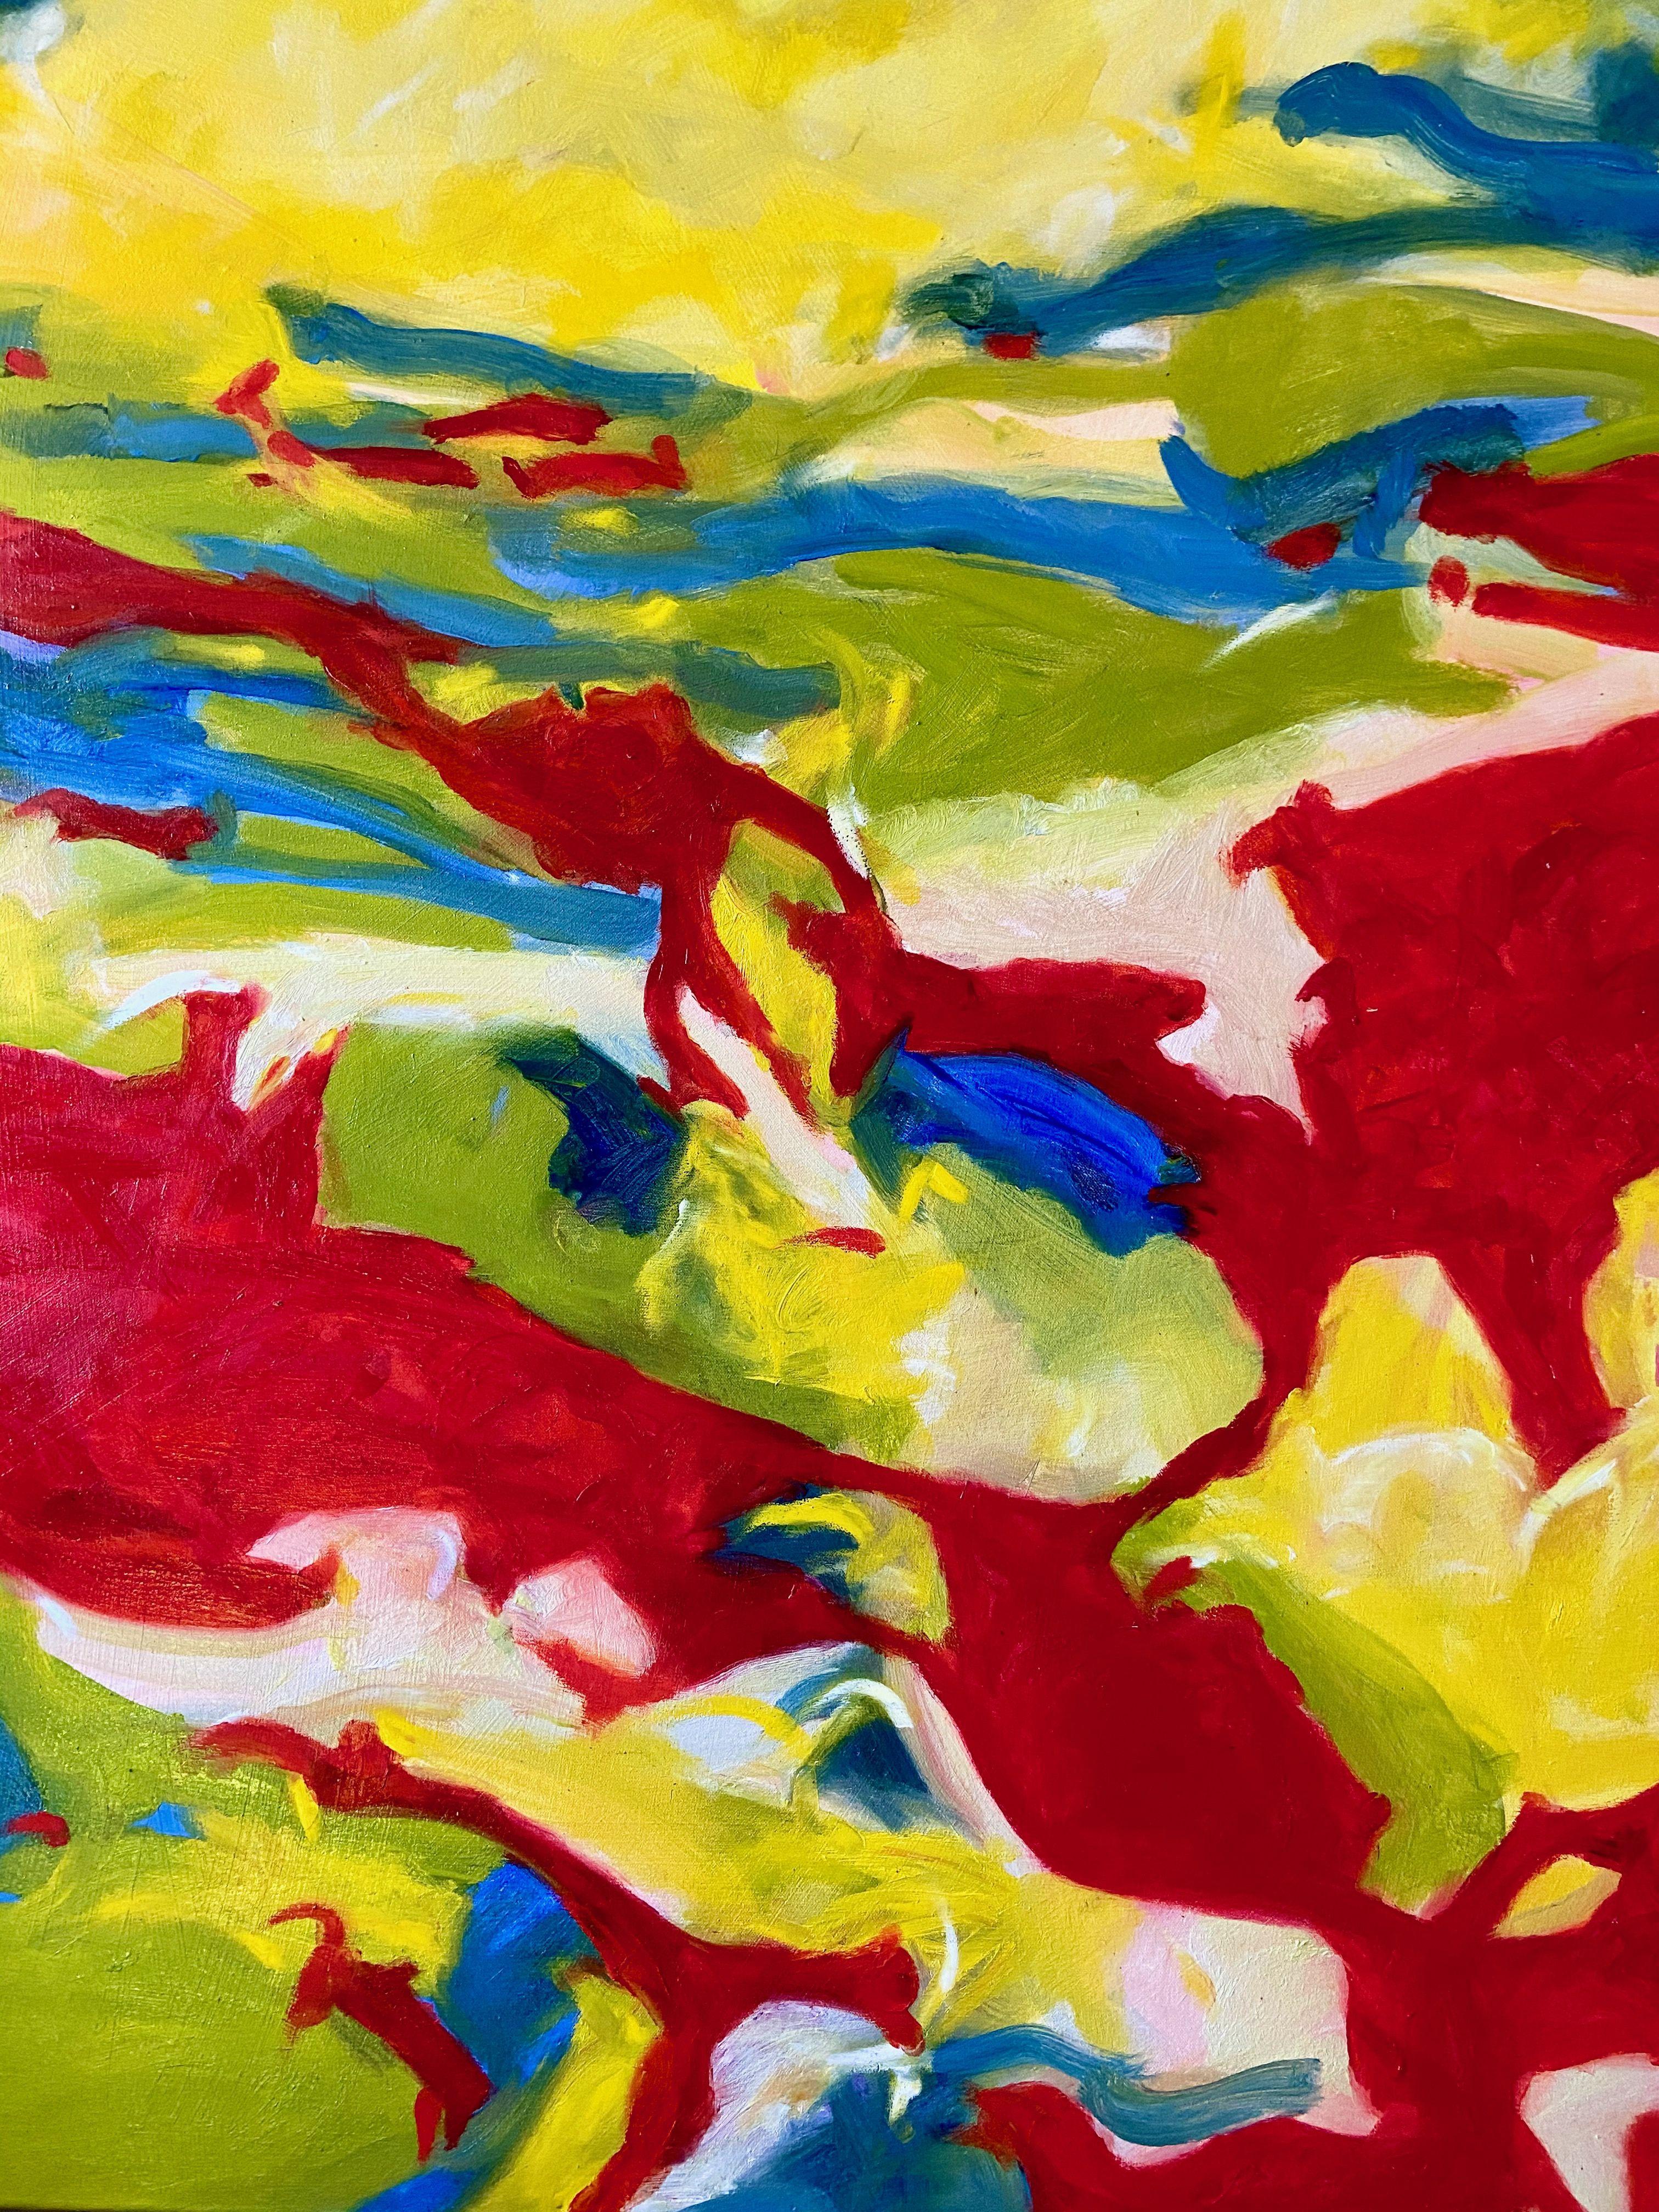 Abstract Painting Steven Miller - Merveillement III, Peinture, Huile sur Toile